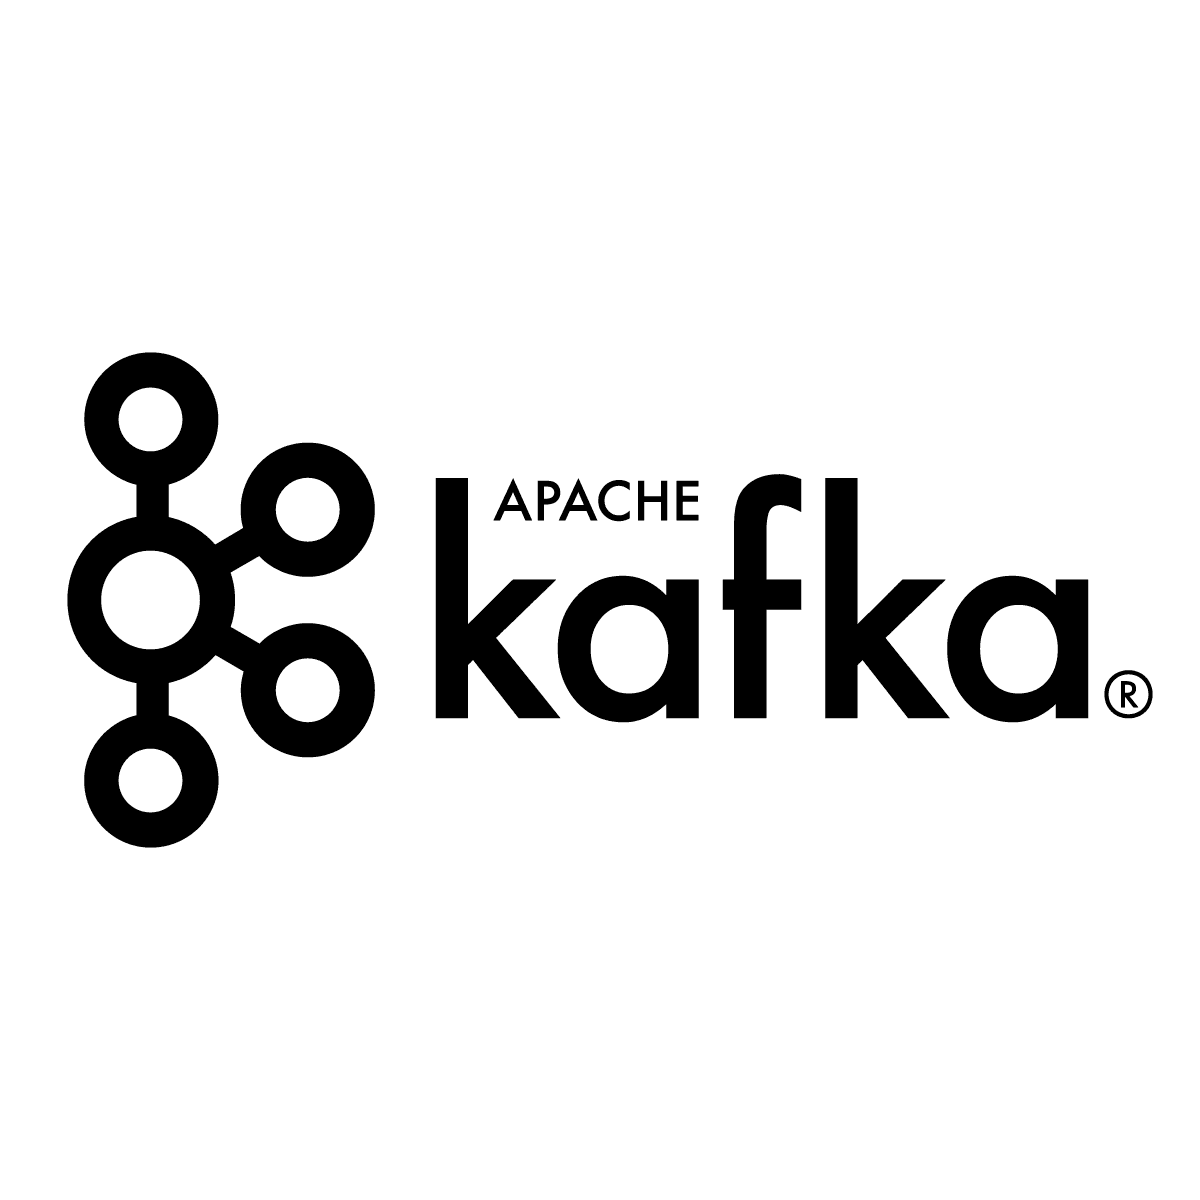 doc/kafka-100-doc-zh/images/apache-kafka.png